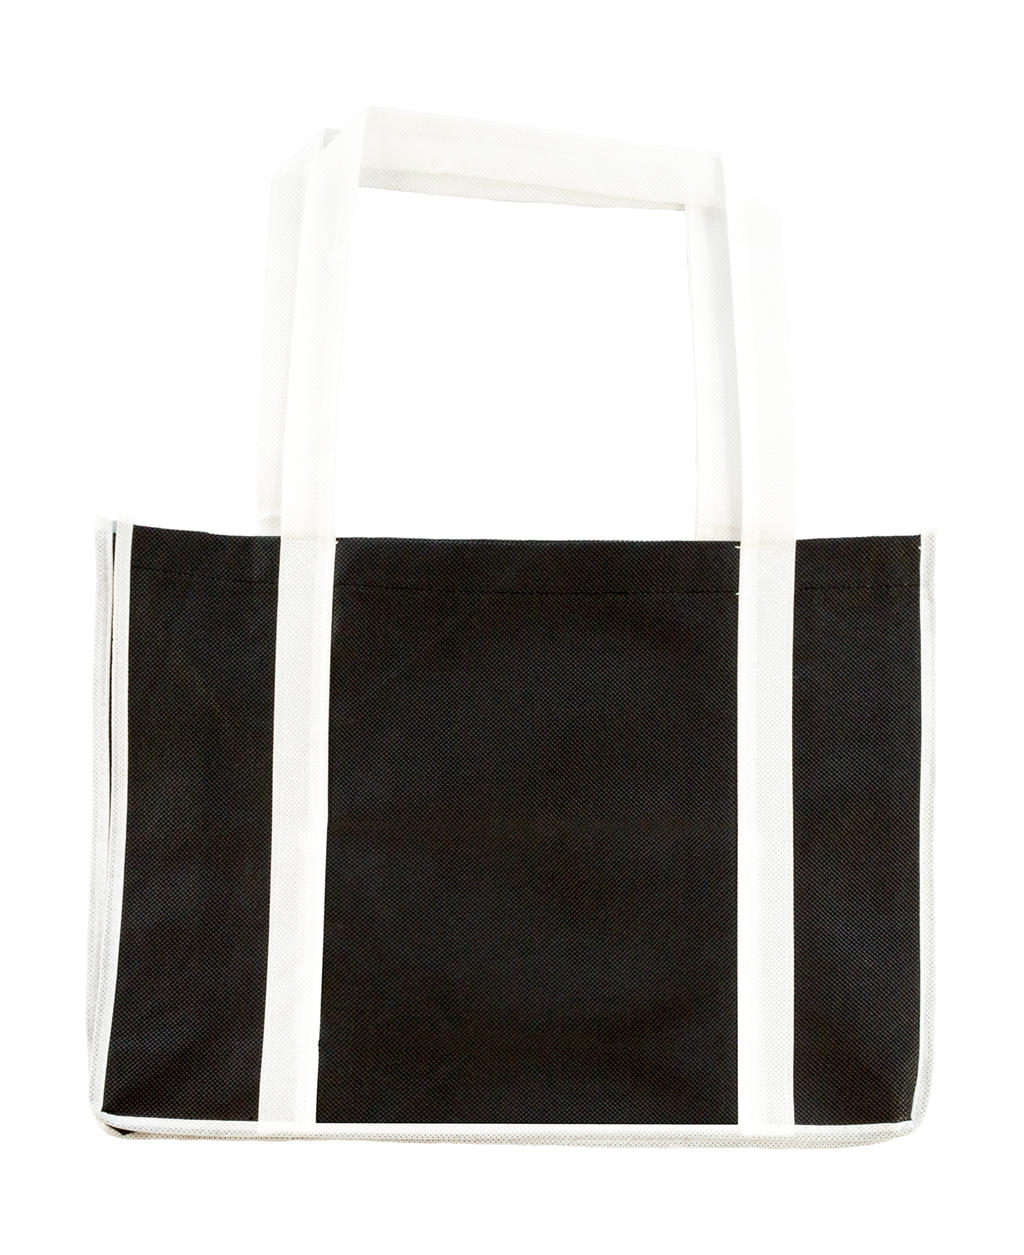  Leisure Bag LH in Farbe Snowwhite/Black